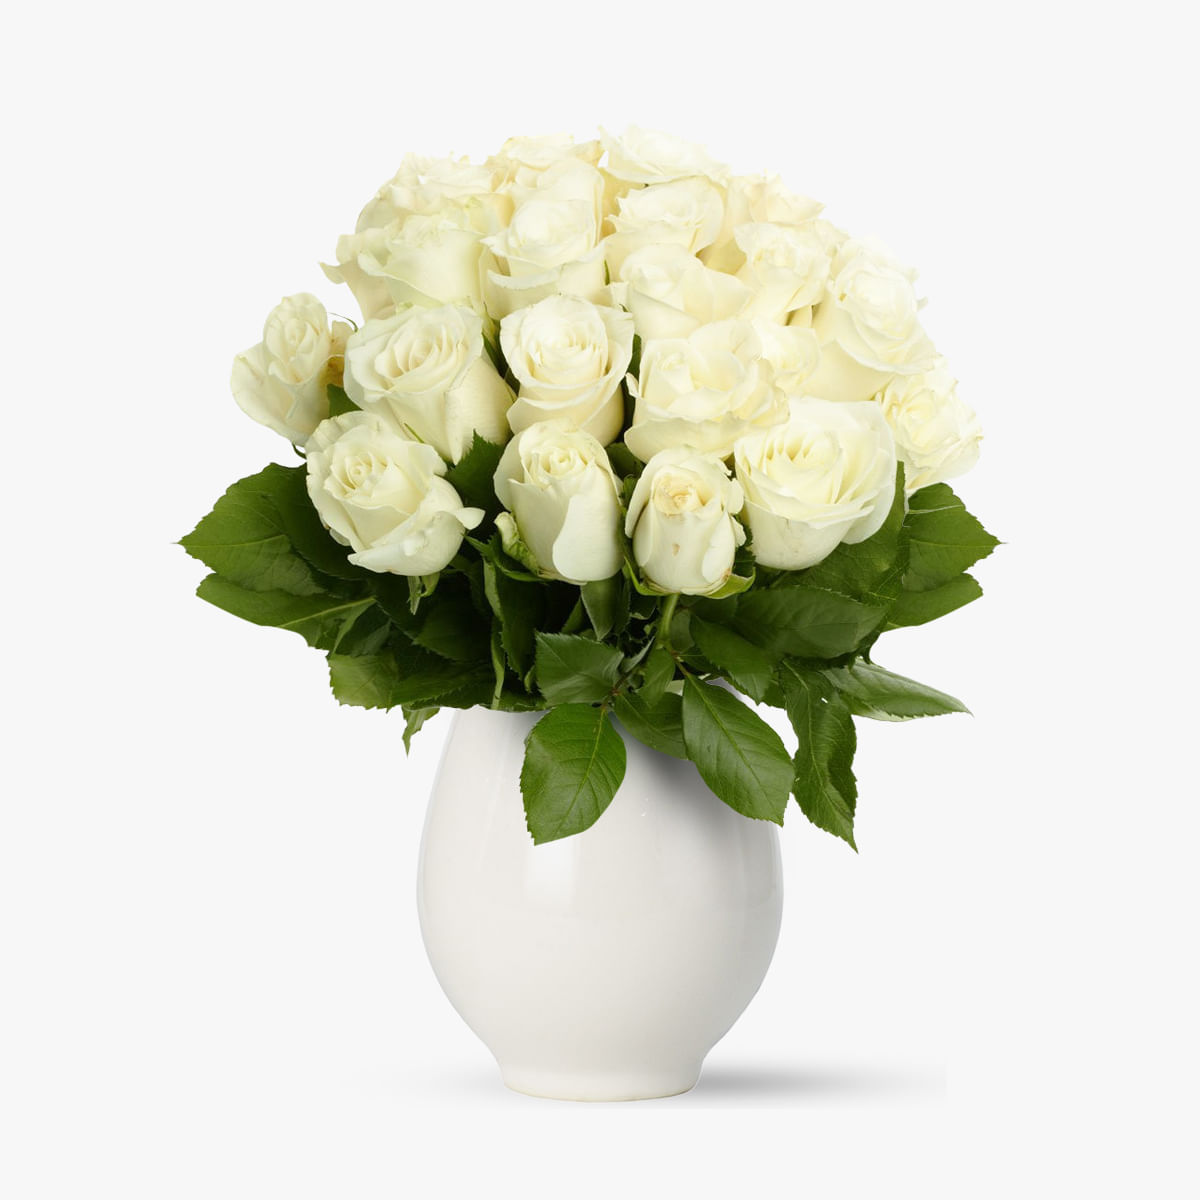 Buchet de 21 trandafiri albi floria.ro